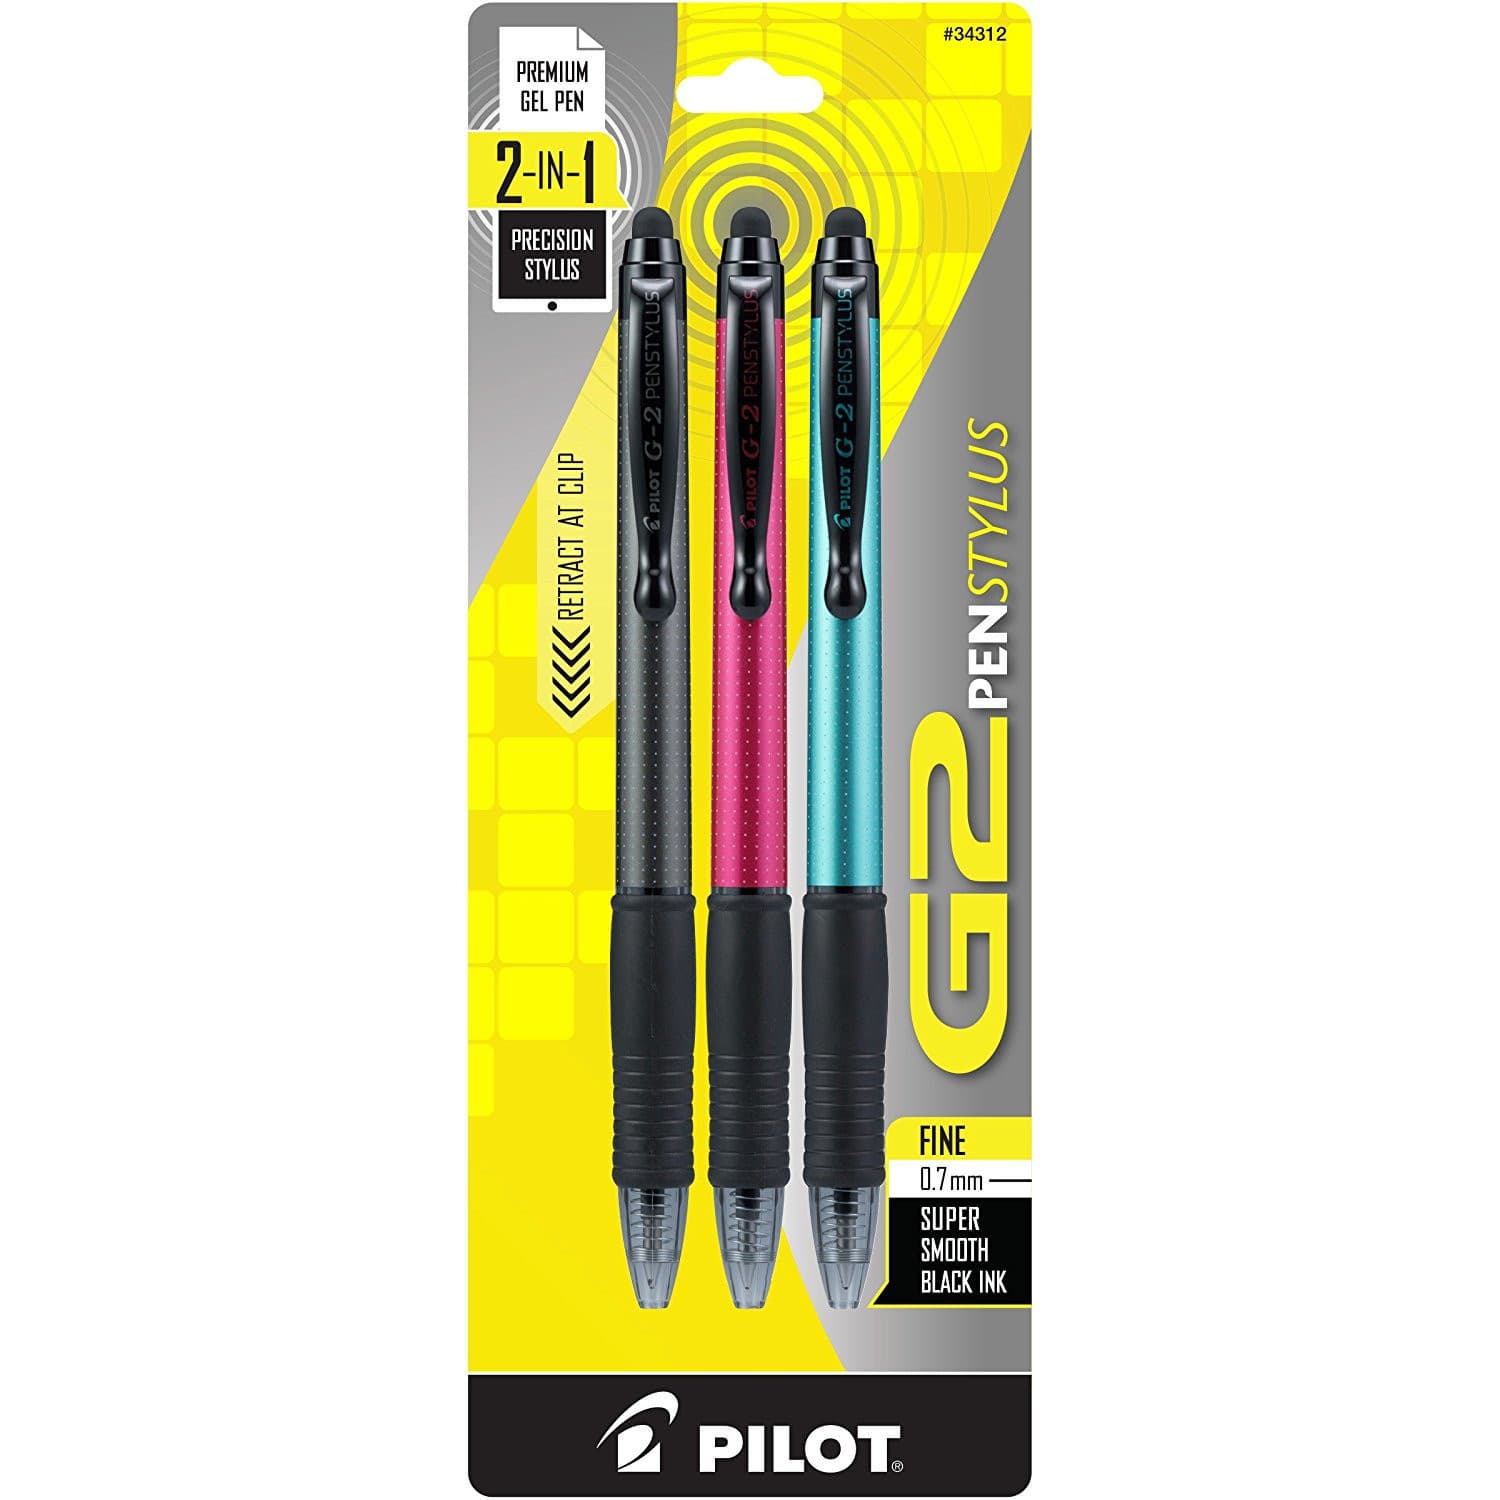 Pilot G2 07 Gel Ink Rolling Ball Pen Refills, 0.7mm Fine Point, 3 Packs